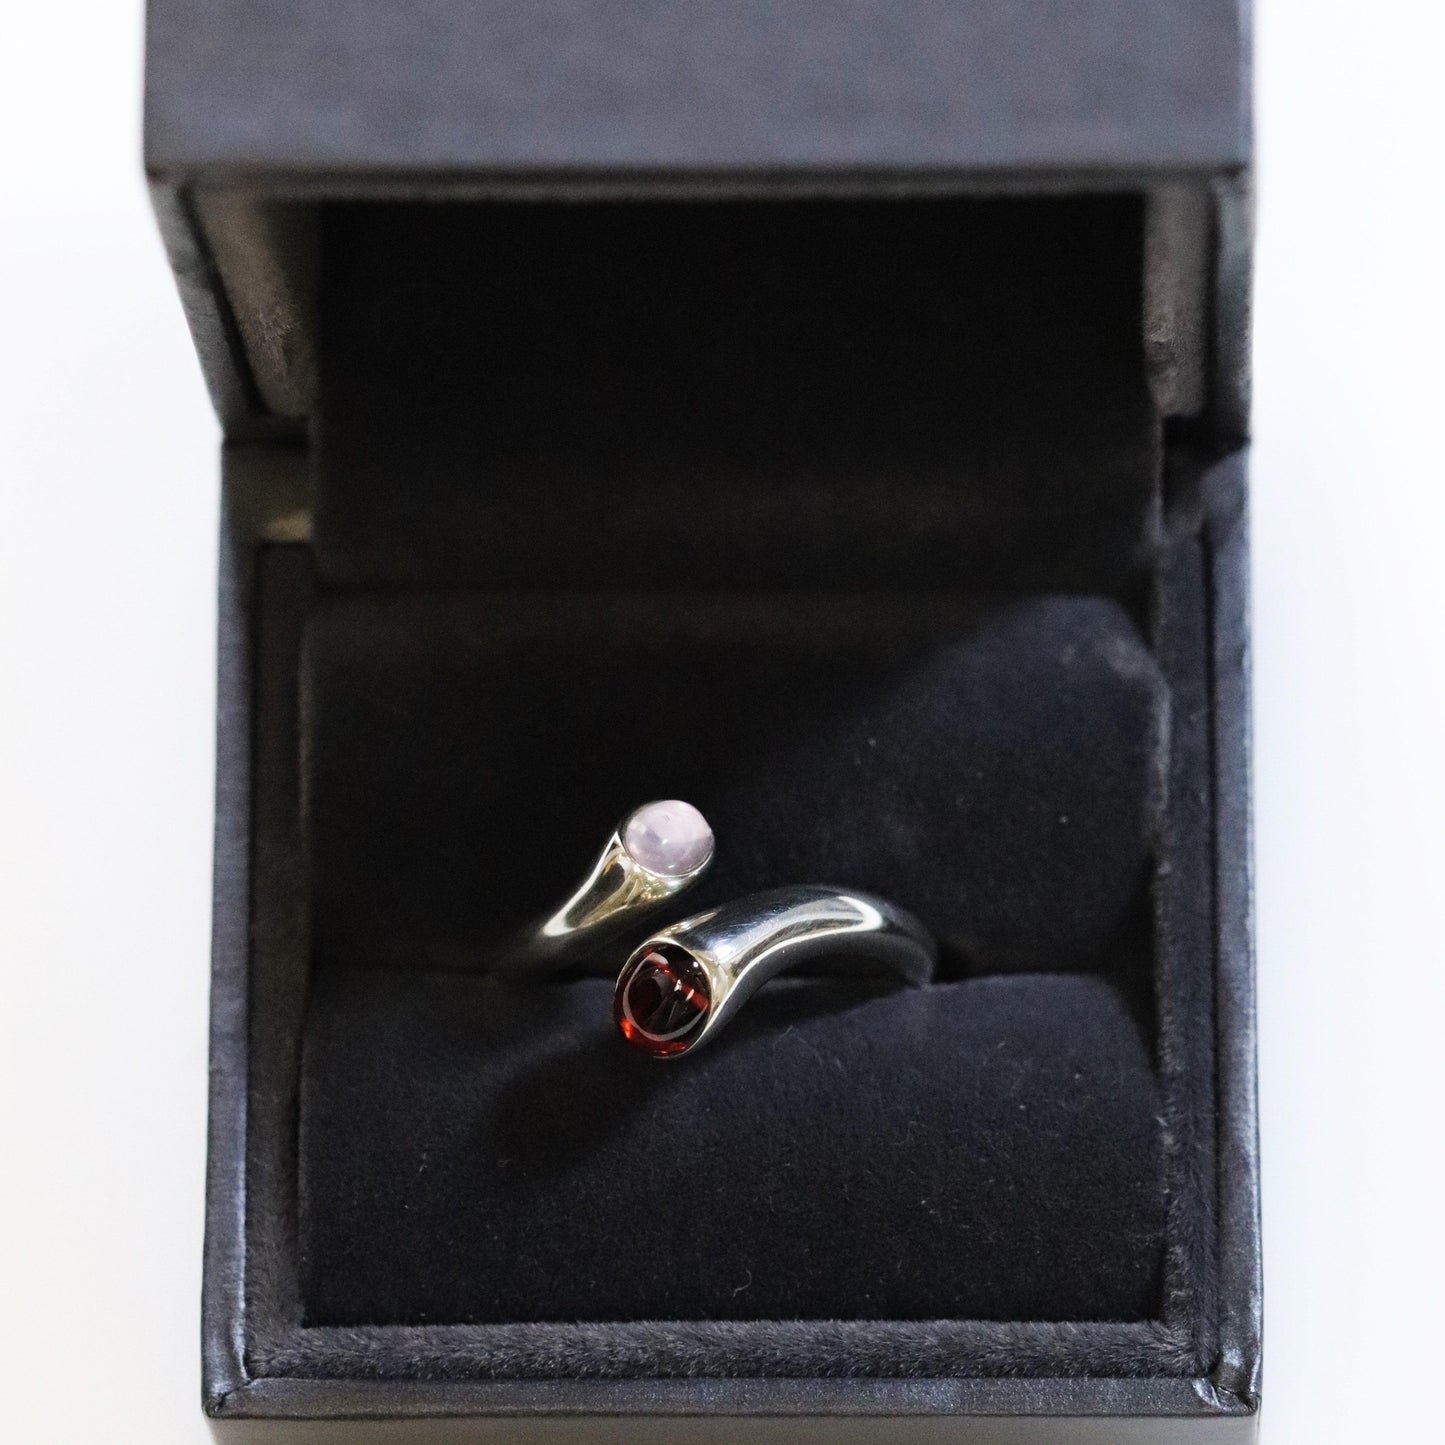 Vintage Georg Jensen Jewelry | Carnival Ring with Garnet and Quartz 263 - Carmel Fine Silver Jewelry